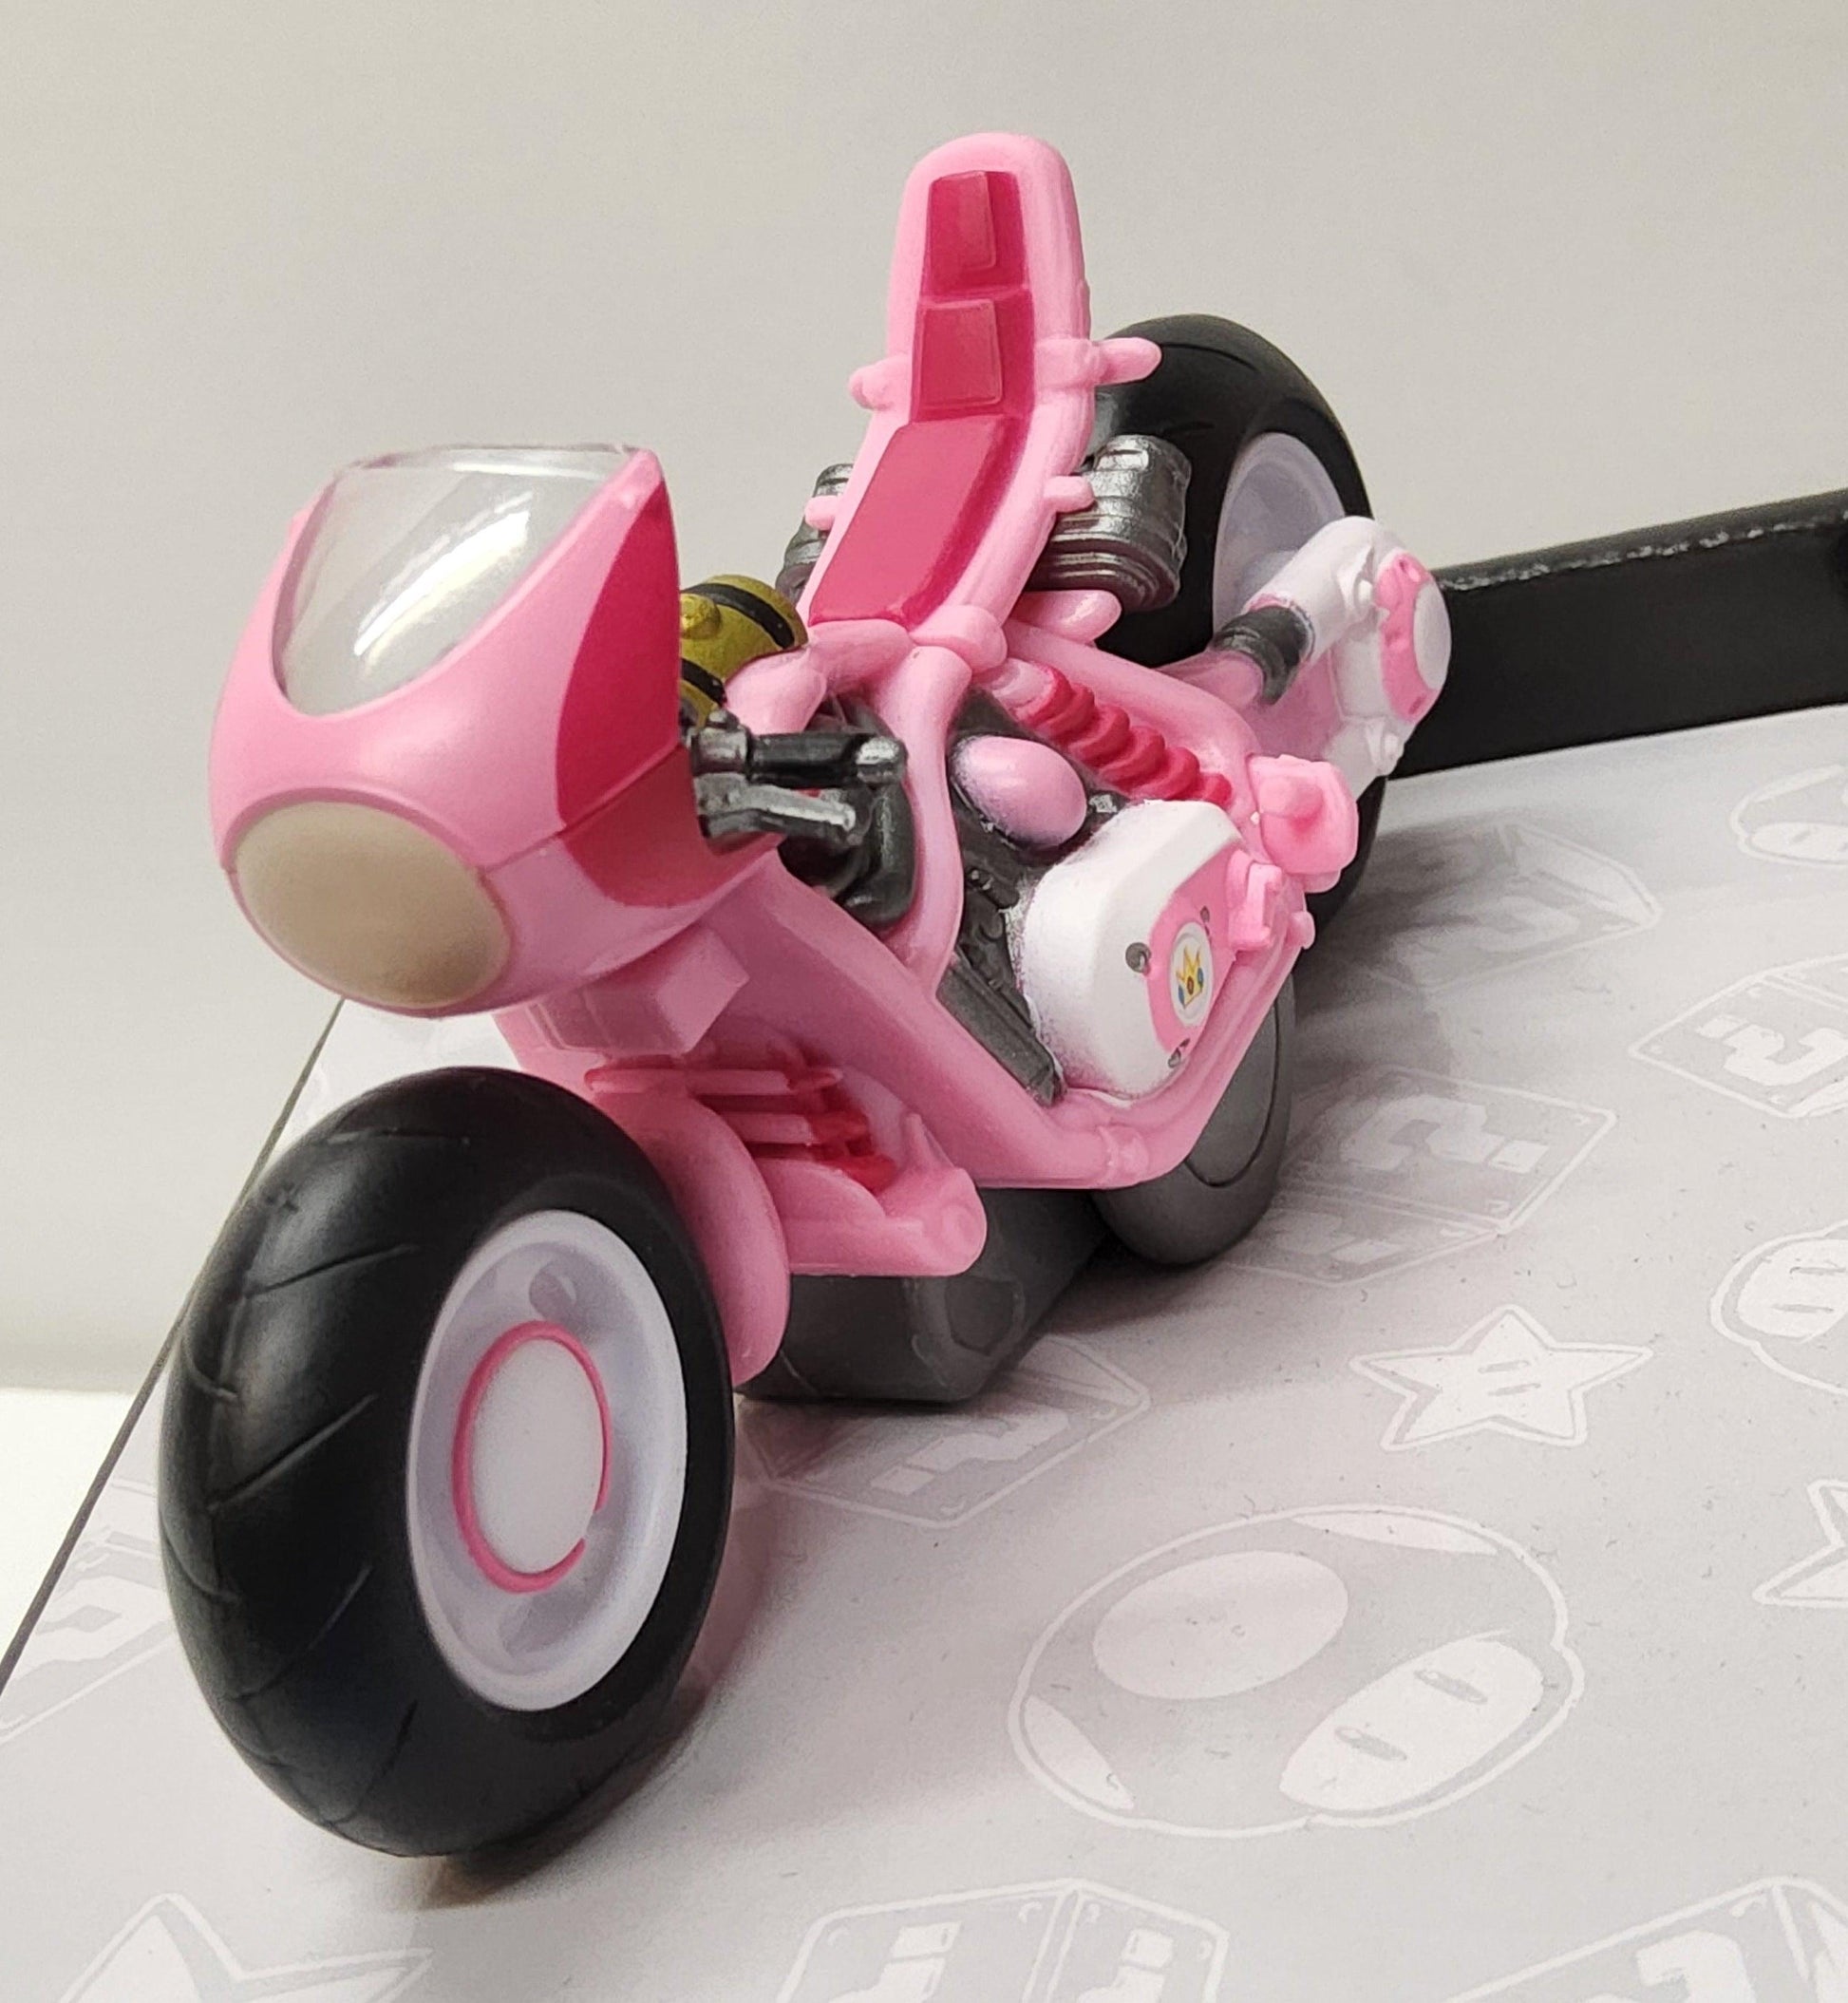 Jakks Pacific Princess Peach Super Mario Bros Racer Nintendo + Illumination Figure - Logan's Toy Chest